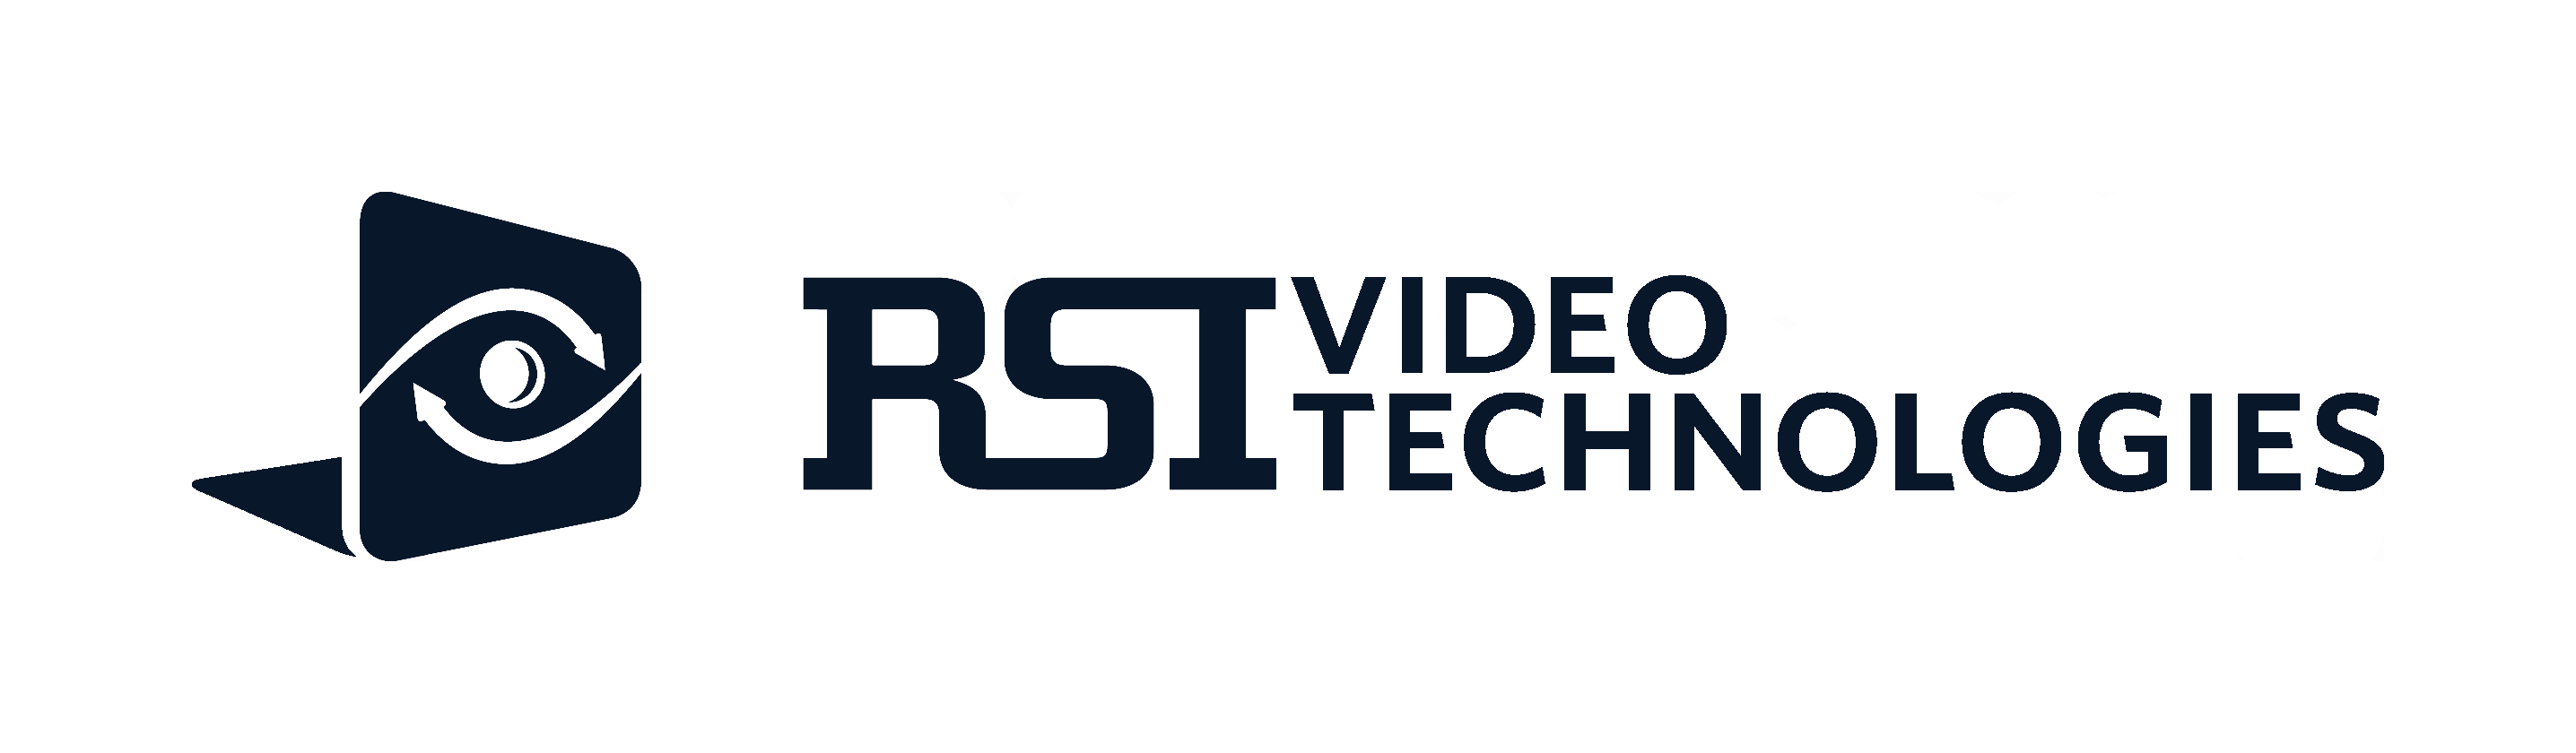 RSI Video Technologies logo